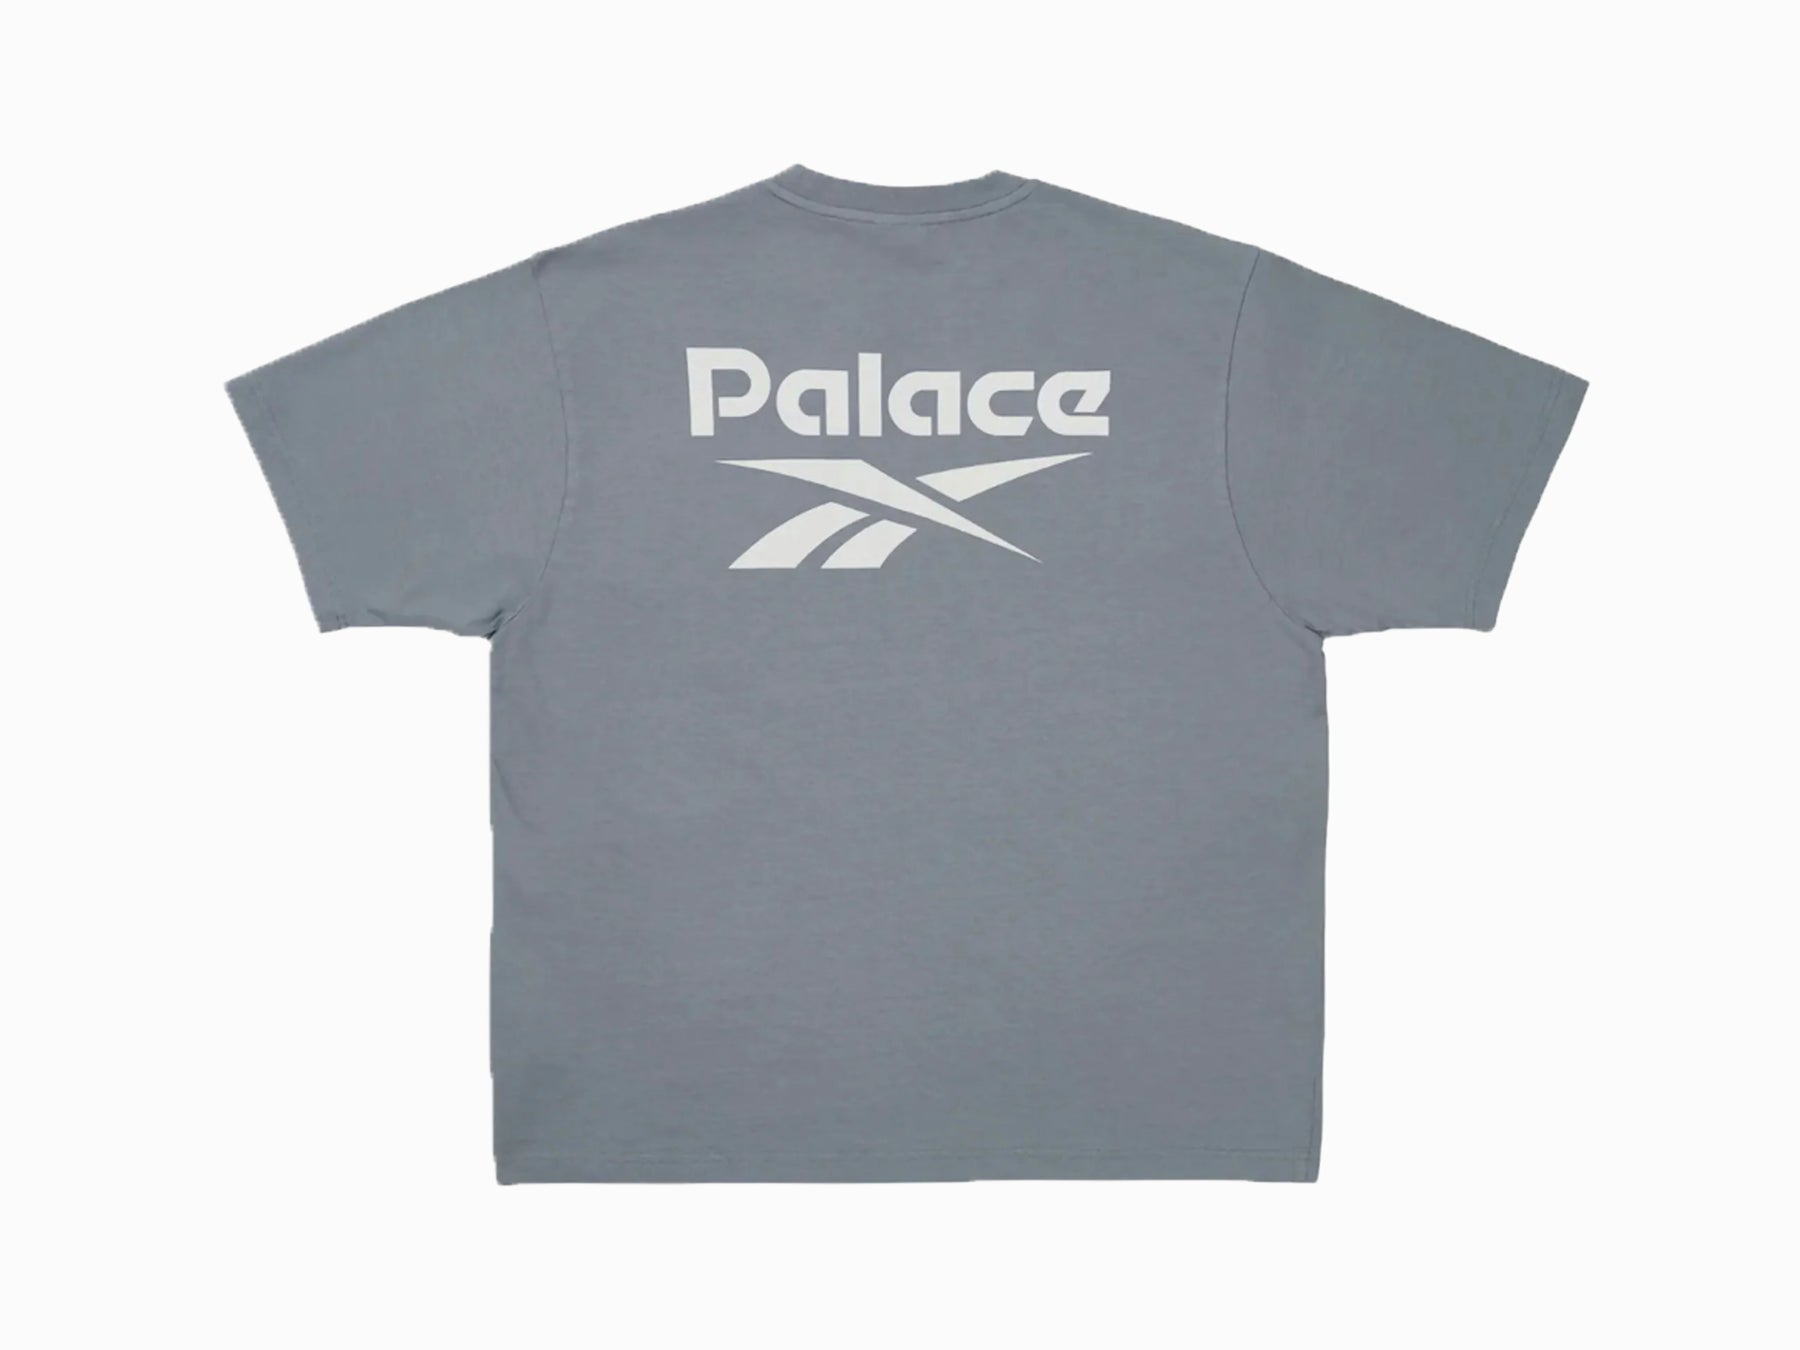 Palace x Reebok Grey T Shirt – Copsource Uk